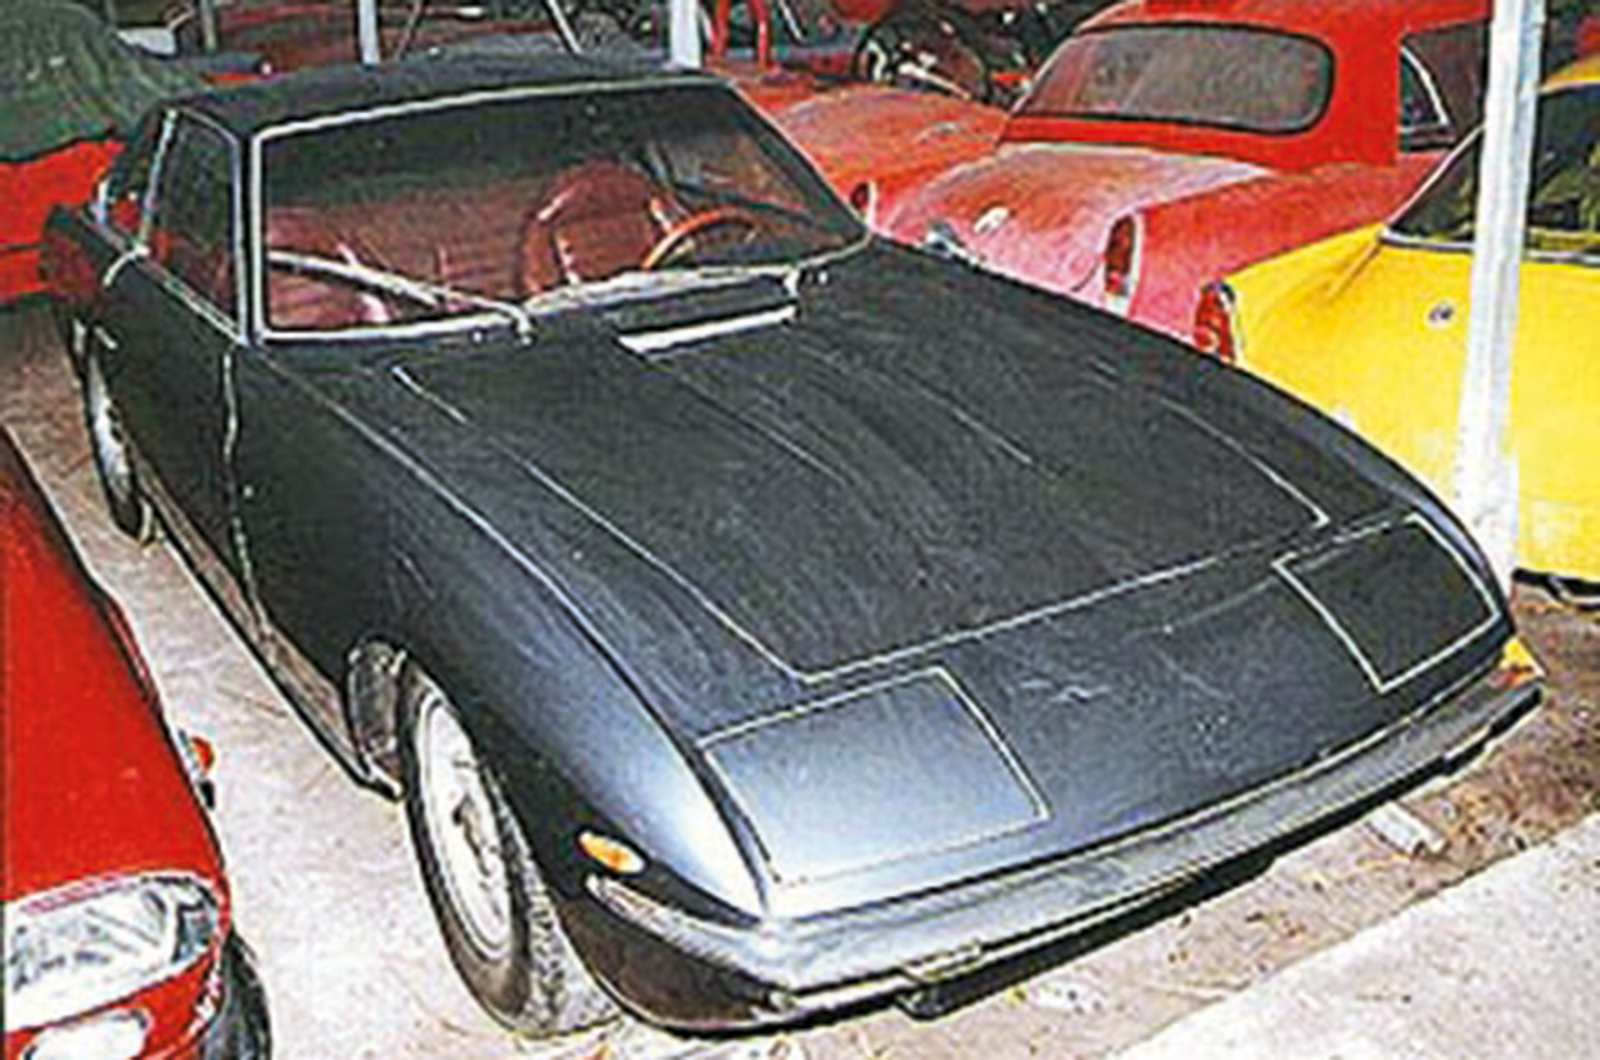 Classic & Sports Car – Our classics: Lamborghini Islero